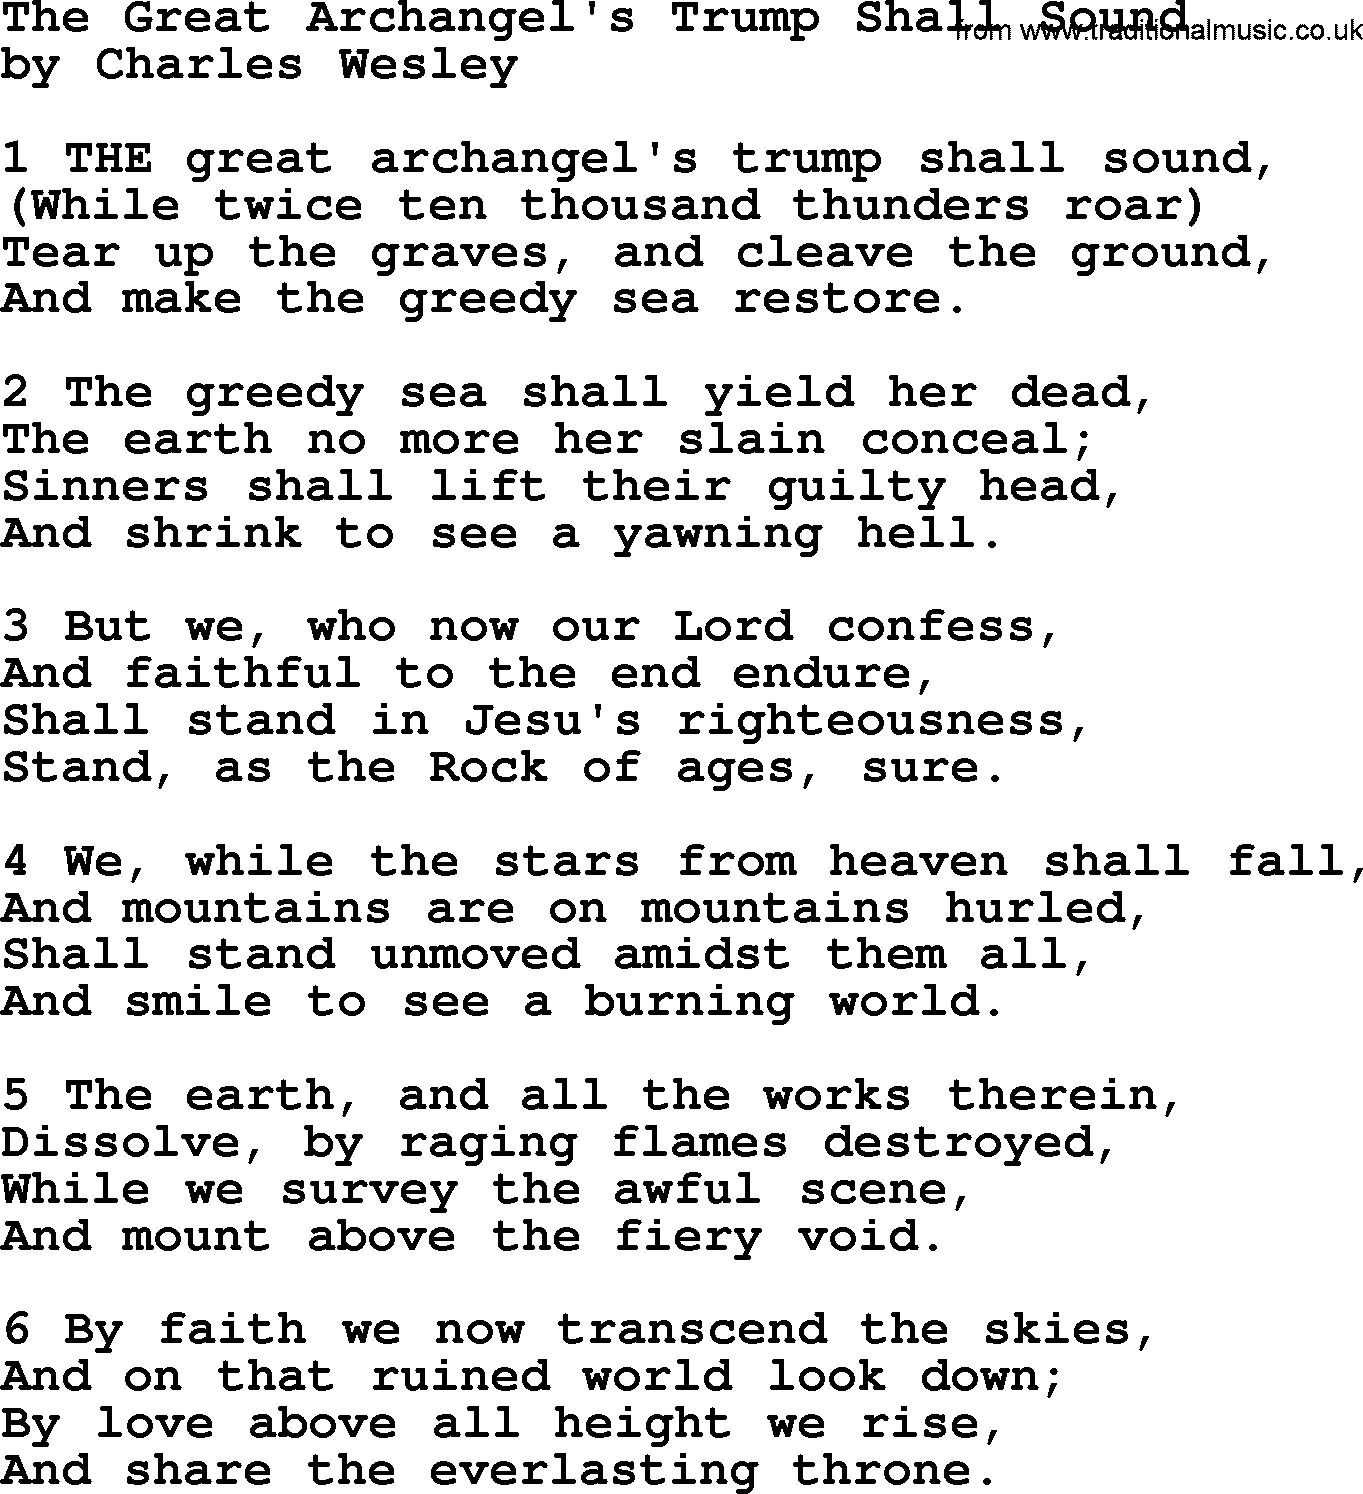 Charles Wesley hymn: The Great Archangel's Trump Shall Sound, lyrics